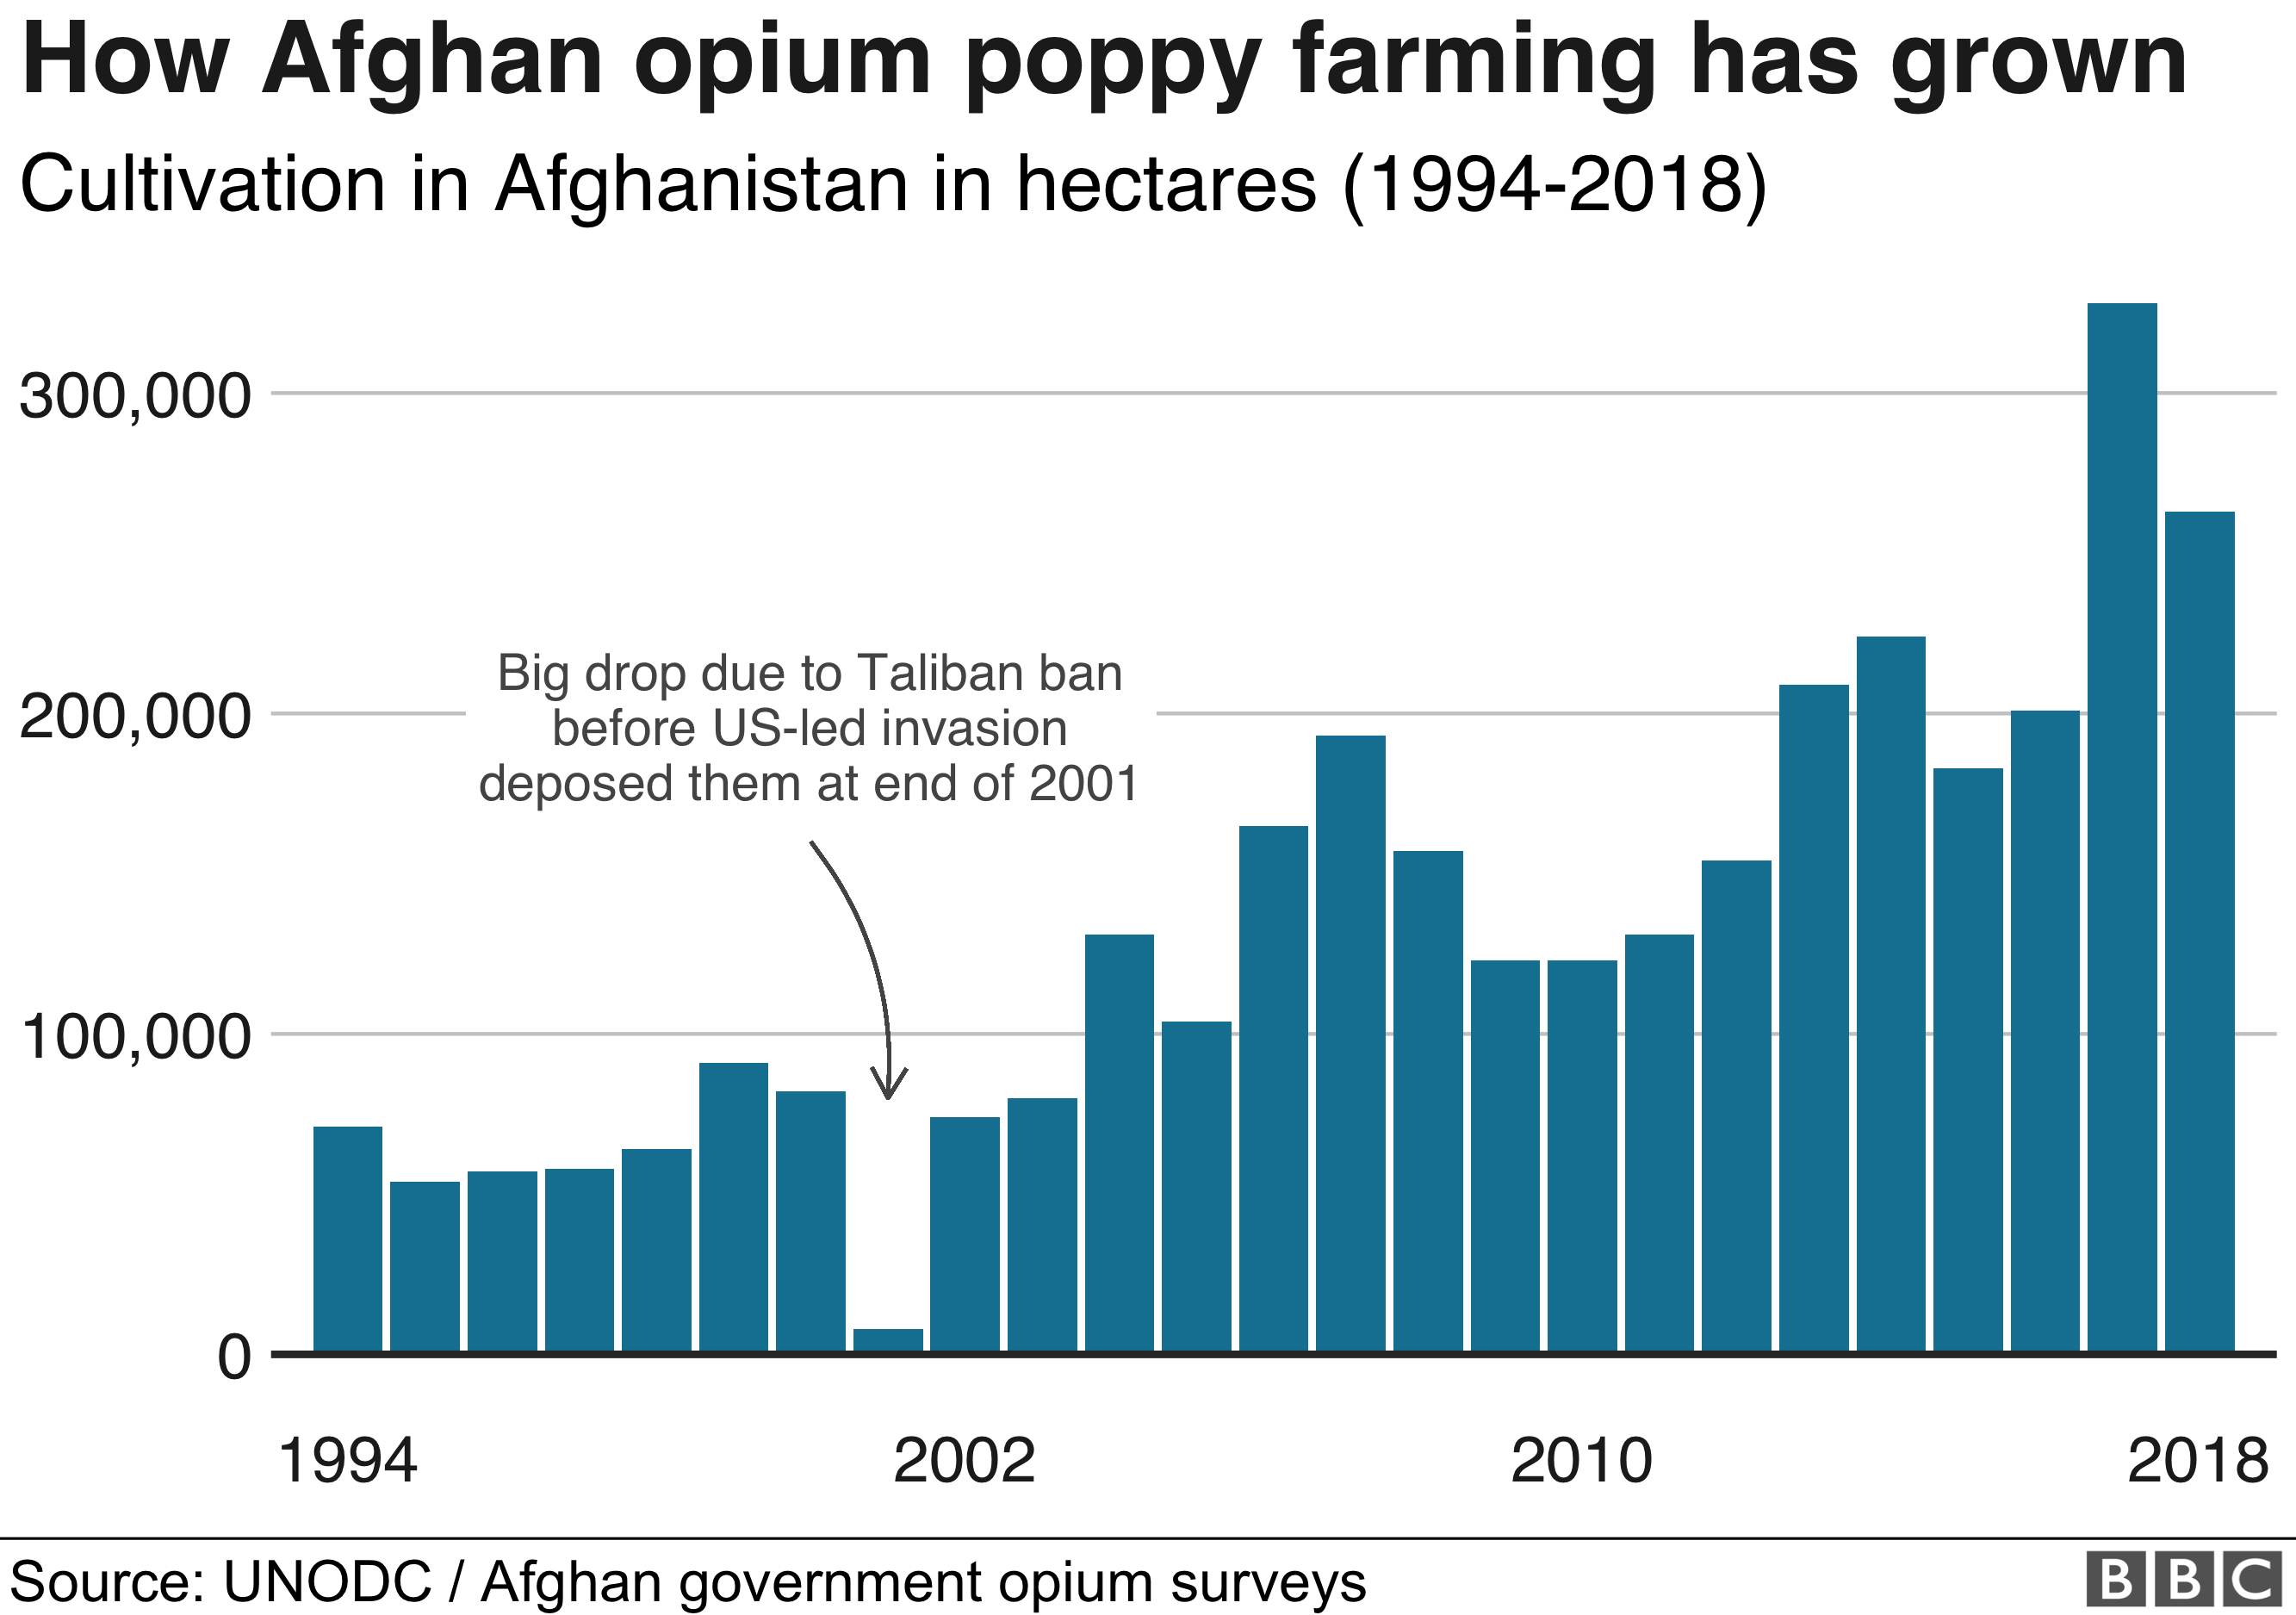 How Afghan poppy farming has grown